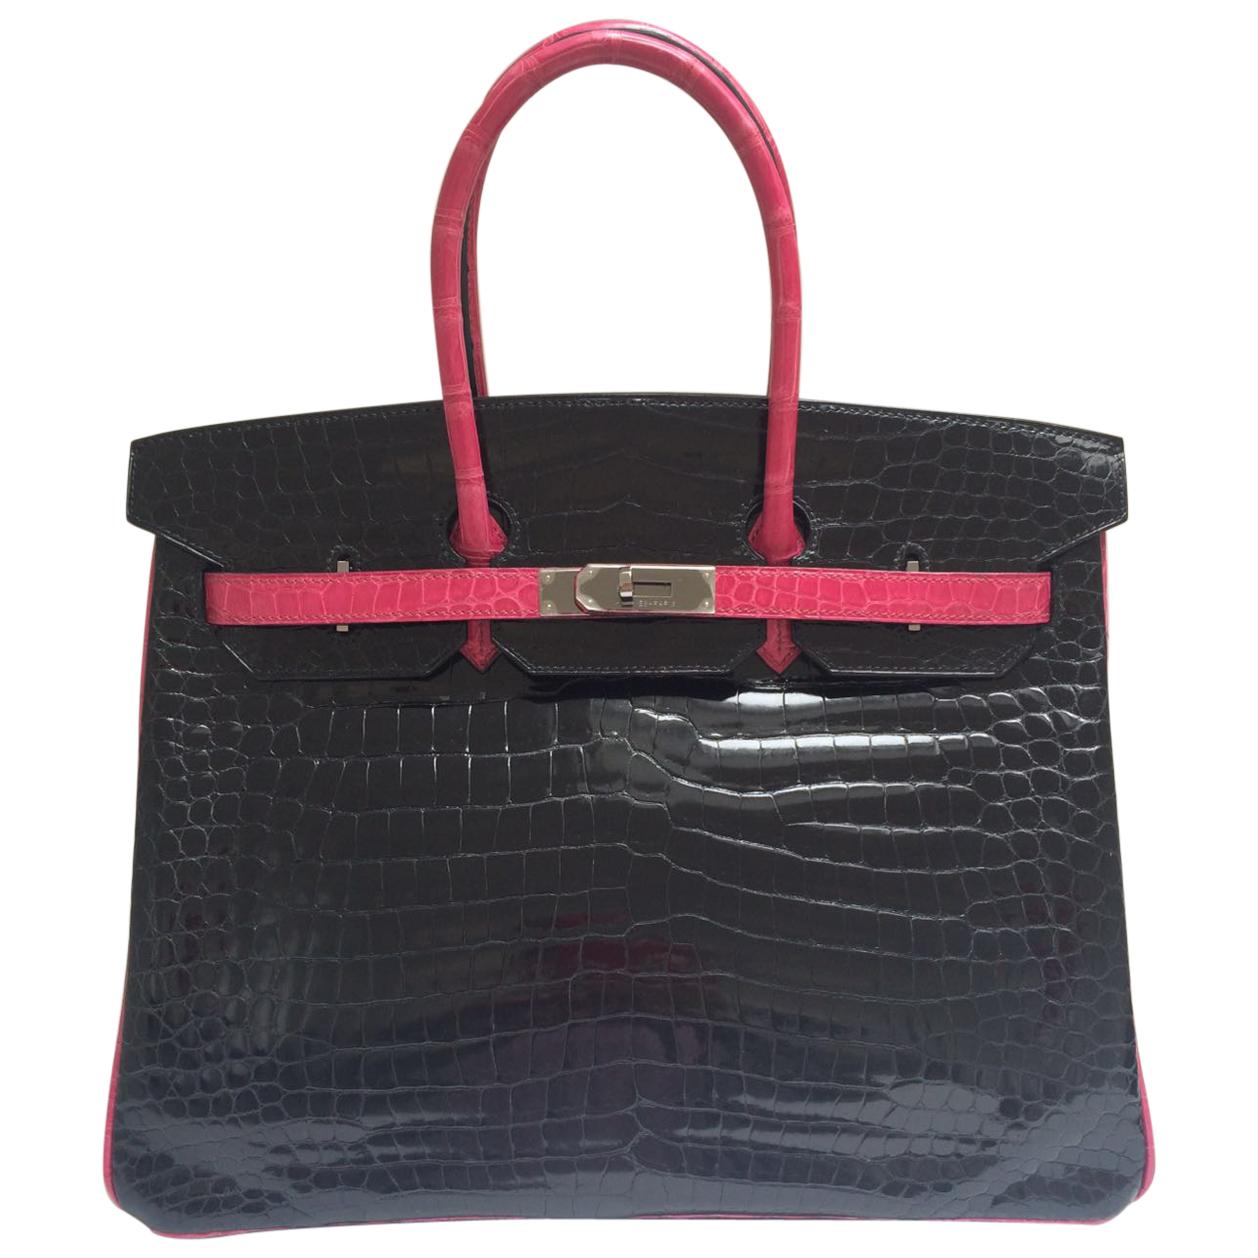 Hermes Black and fuchsia shiny crocodile Birkin 35cm Bag im Angebot